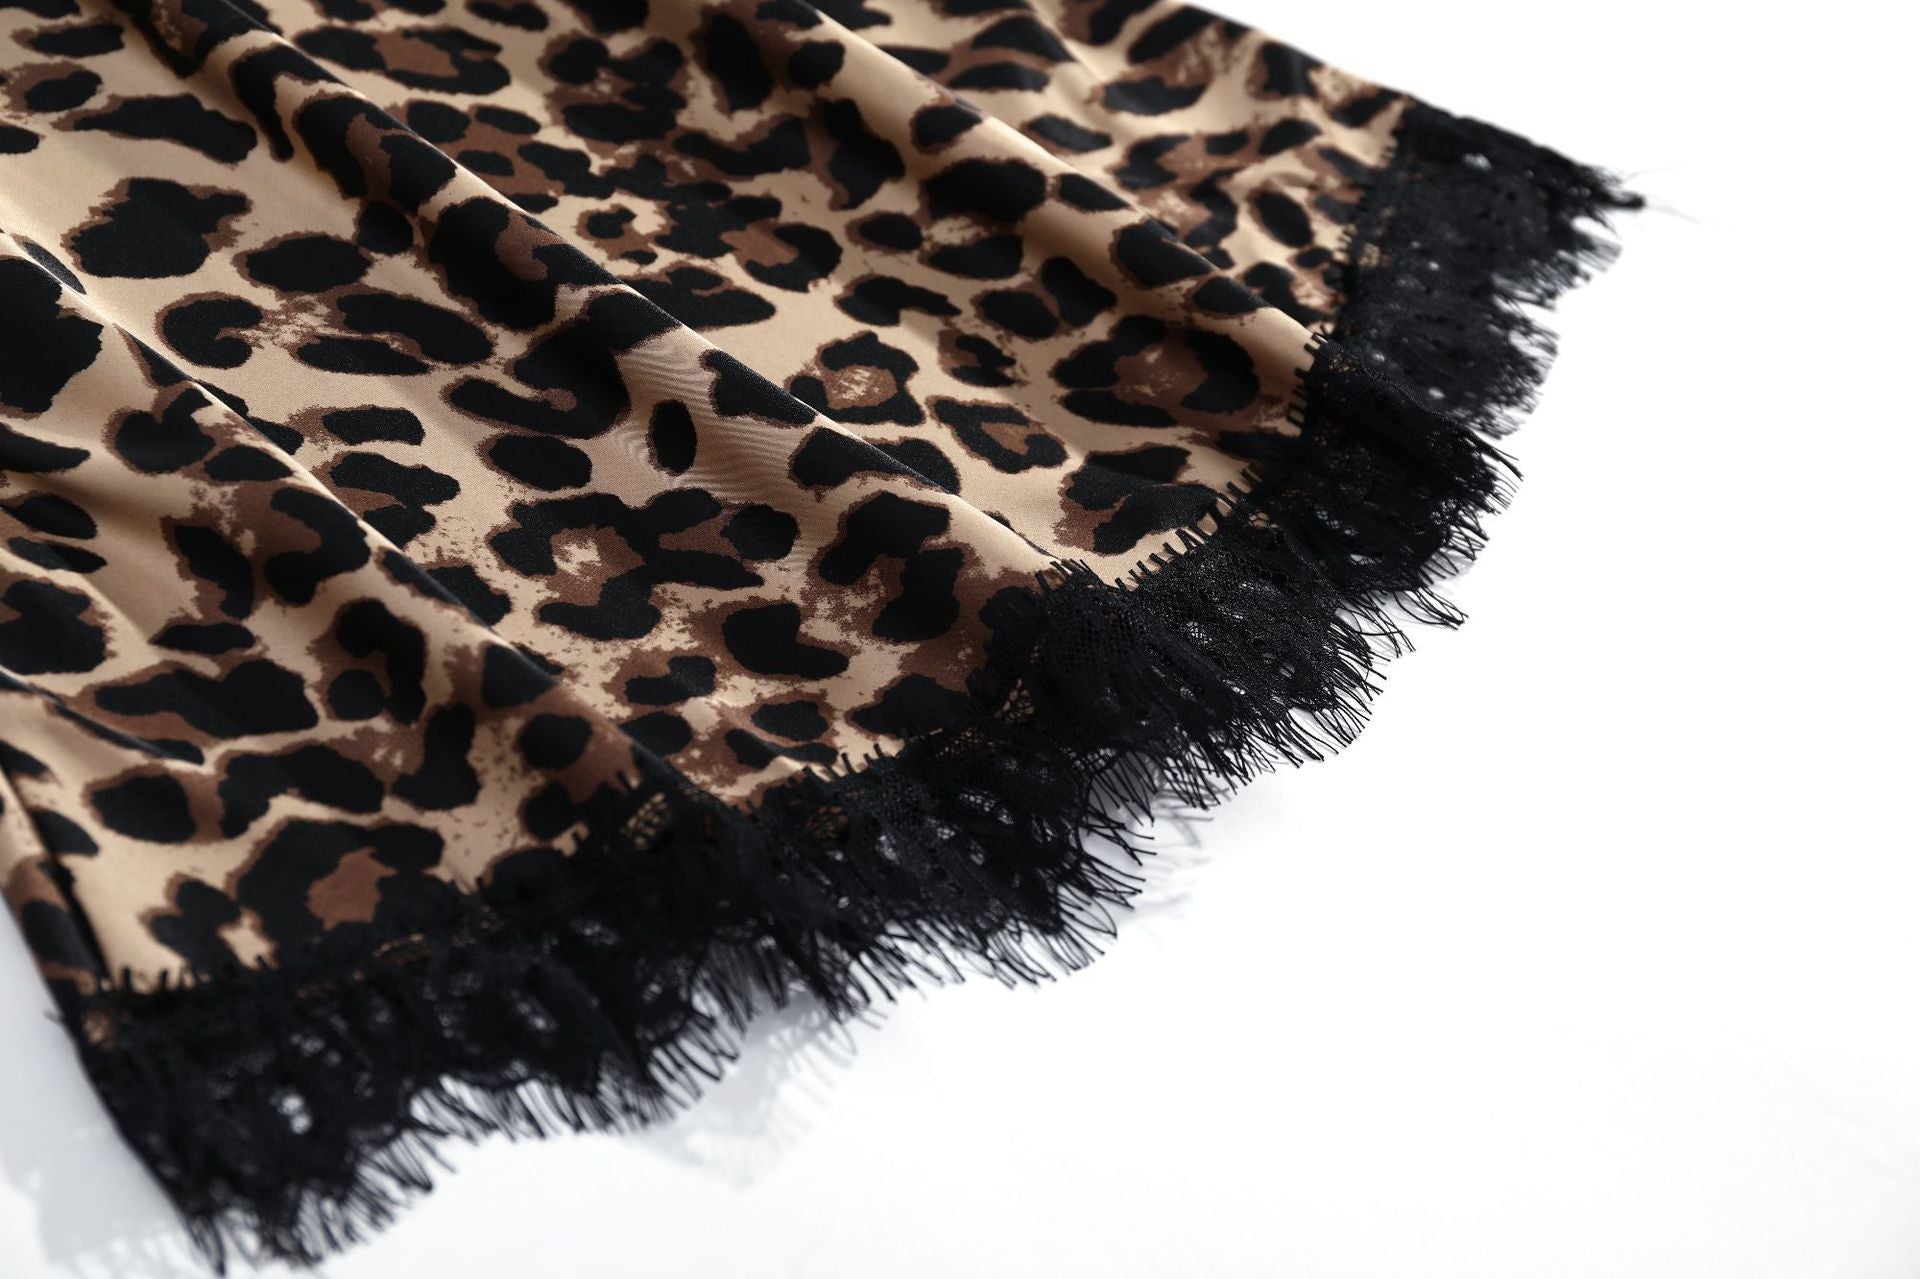 4pcs Leopard Print Robe & Cami Top & Night Dress & Shorts Sai Feel